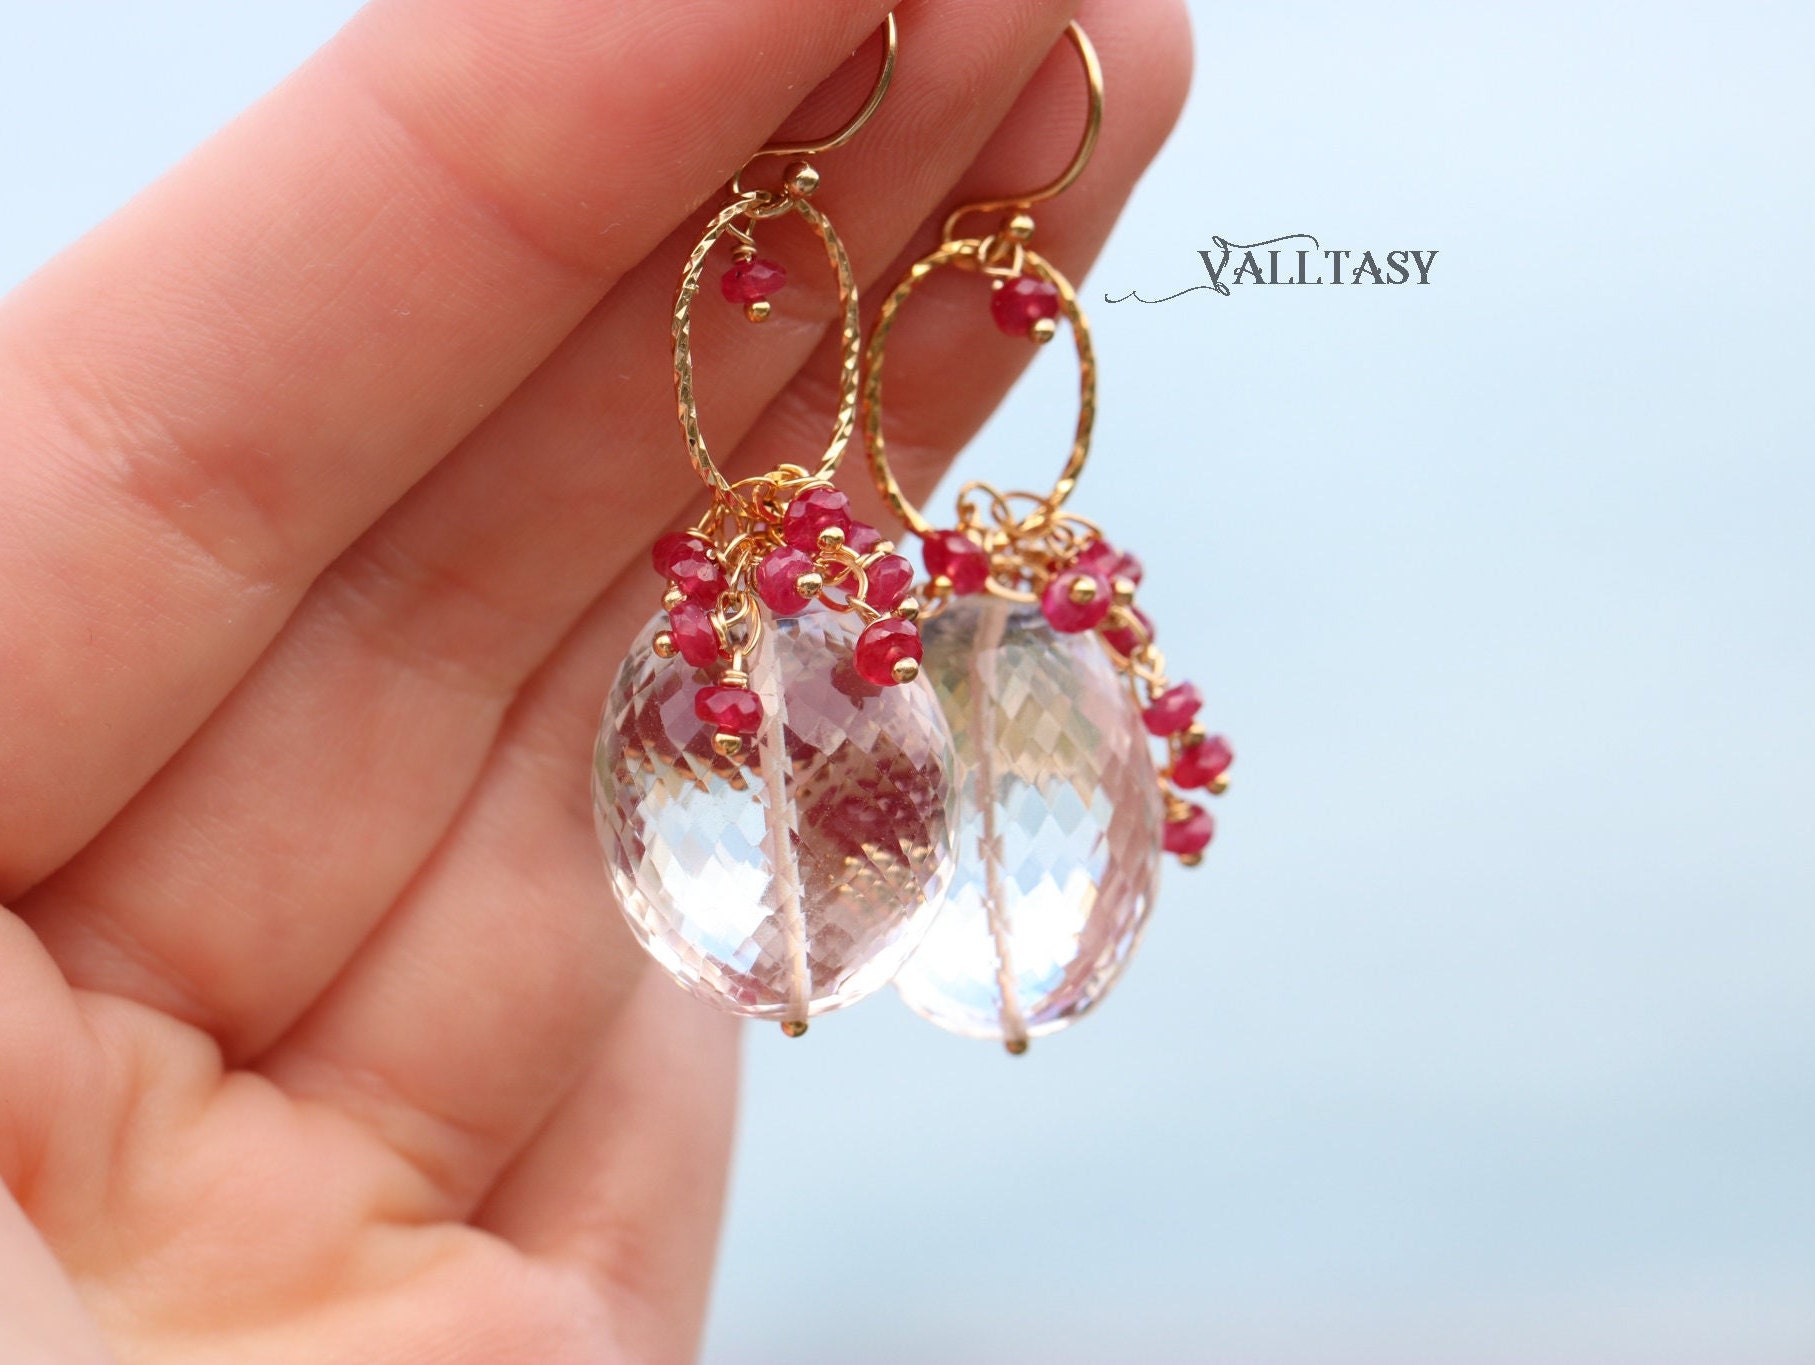 Rock Crystal Quartz and Red Ruby Earrings, Gemstone Earrings in Gold Filled